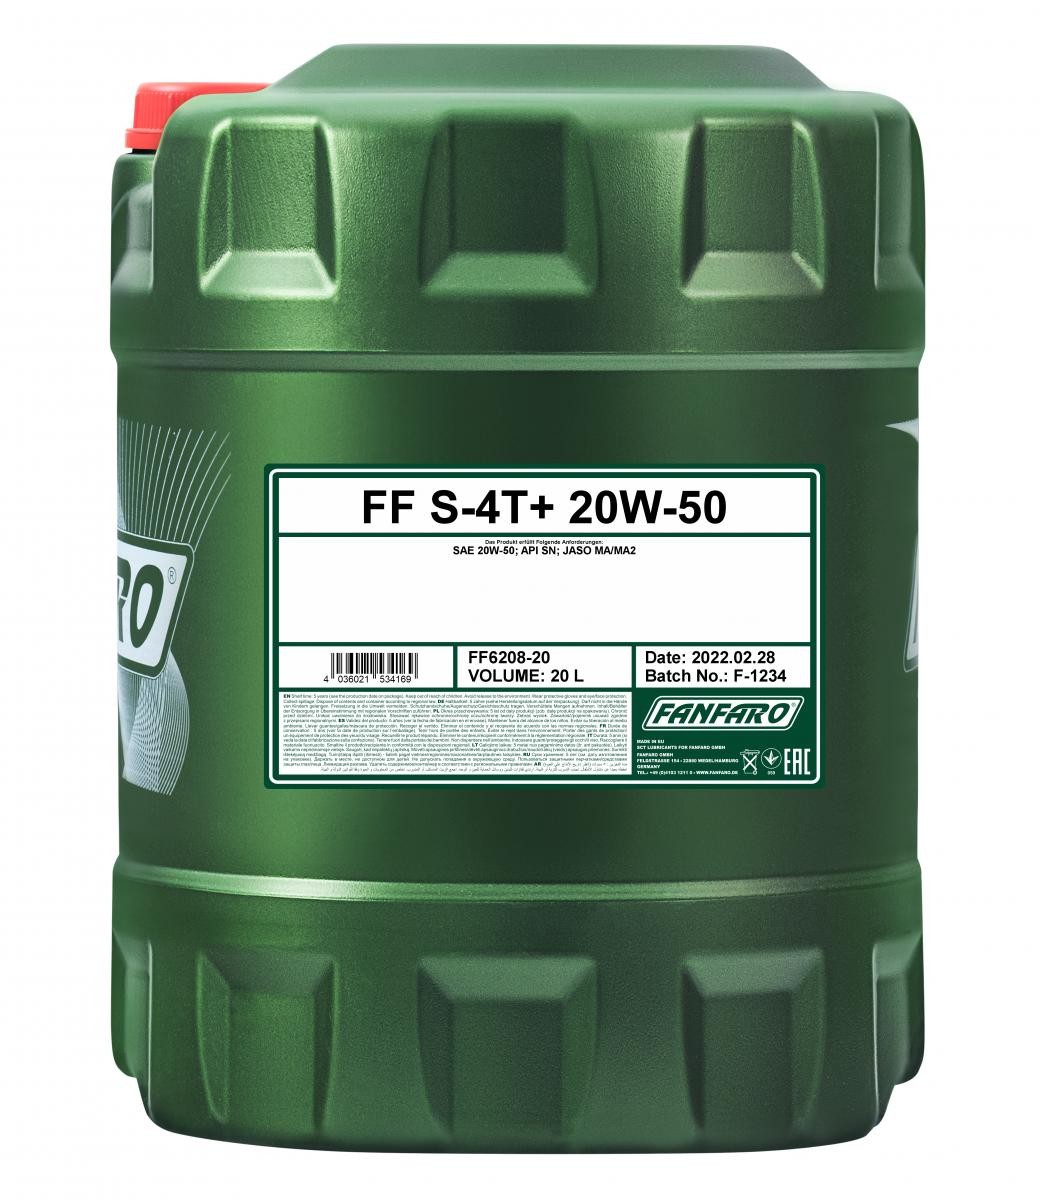 Automobile oil FANFARO 20W-50, 20l longlife FF6208-20